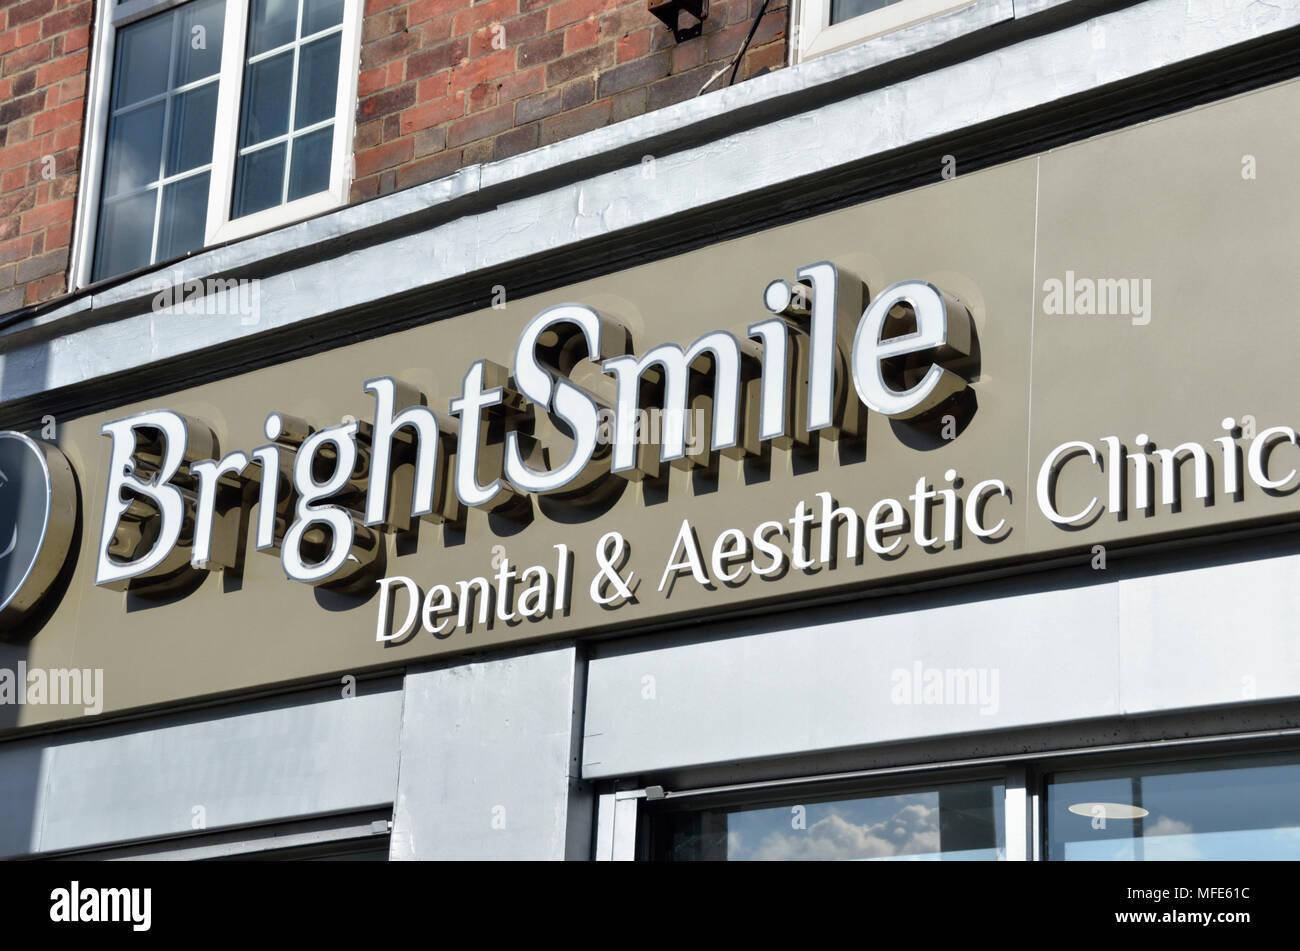 Helles Lächeln Zahnärztliche und ästhetische Klinik in Finchley Road NW3, London, UK. Stockfoto